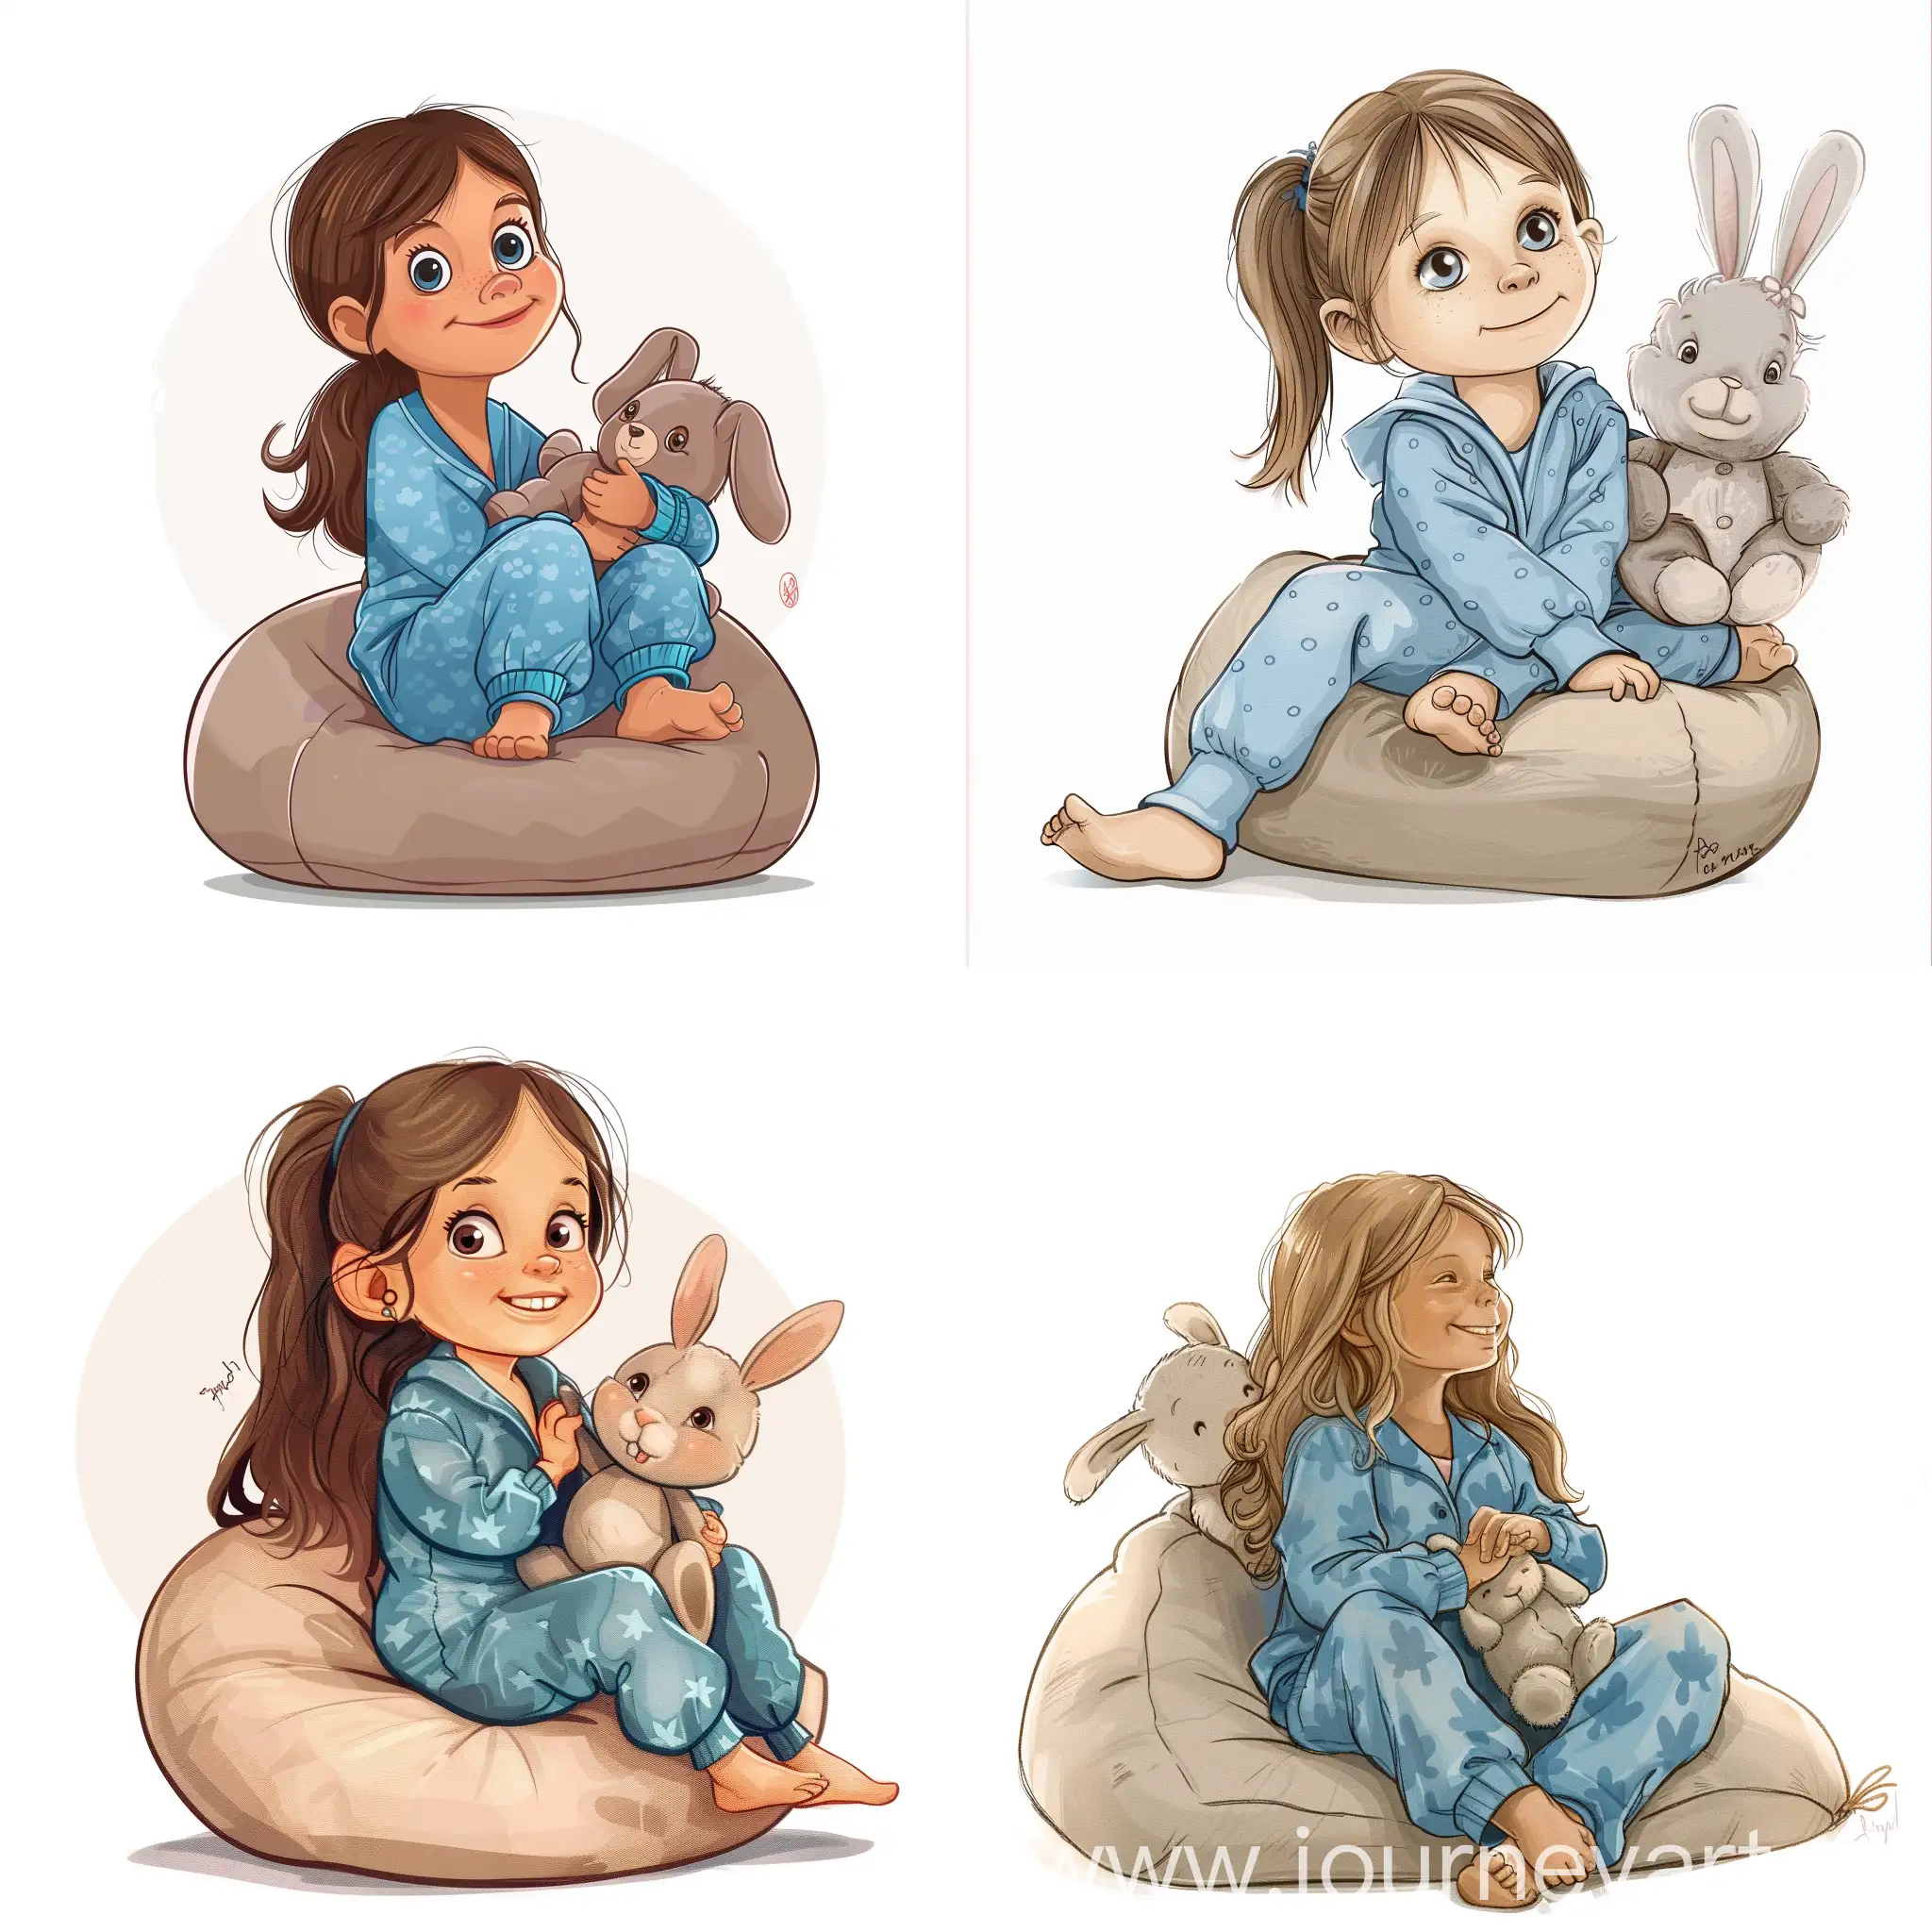 Adorable-5YearOld-Girl-in-Blue-Pajamas-with-Stuffed-Bunny